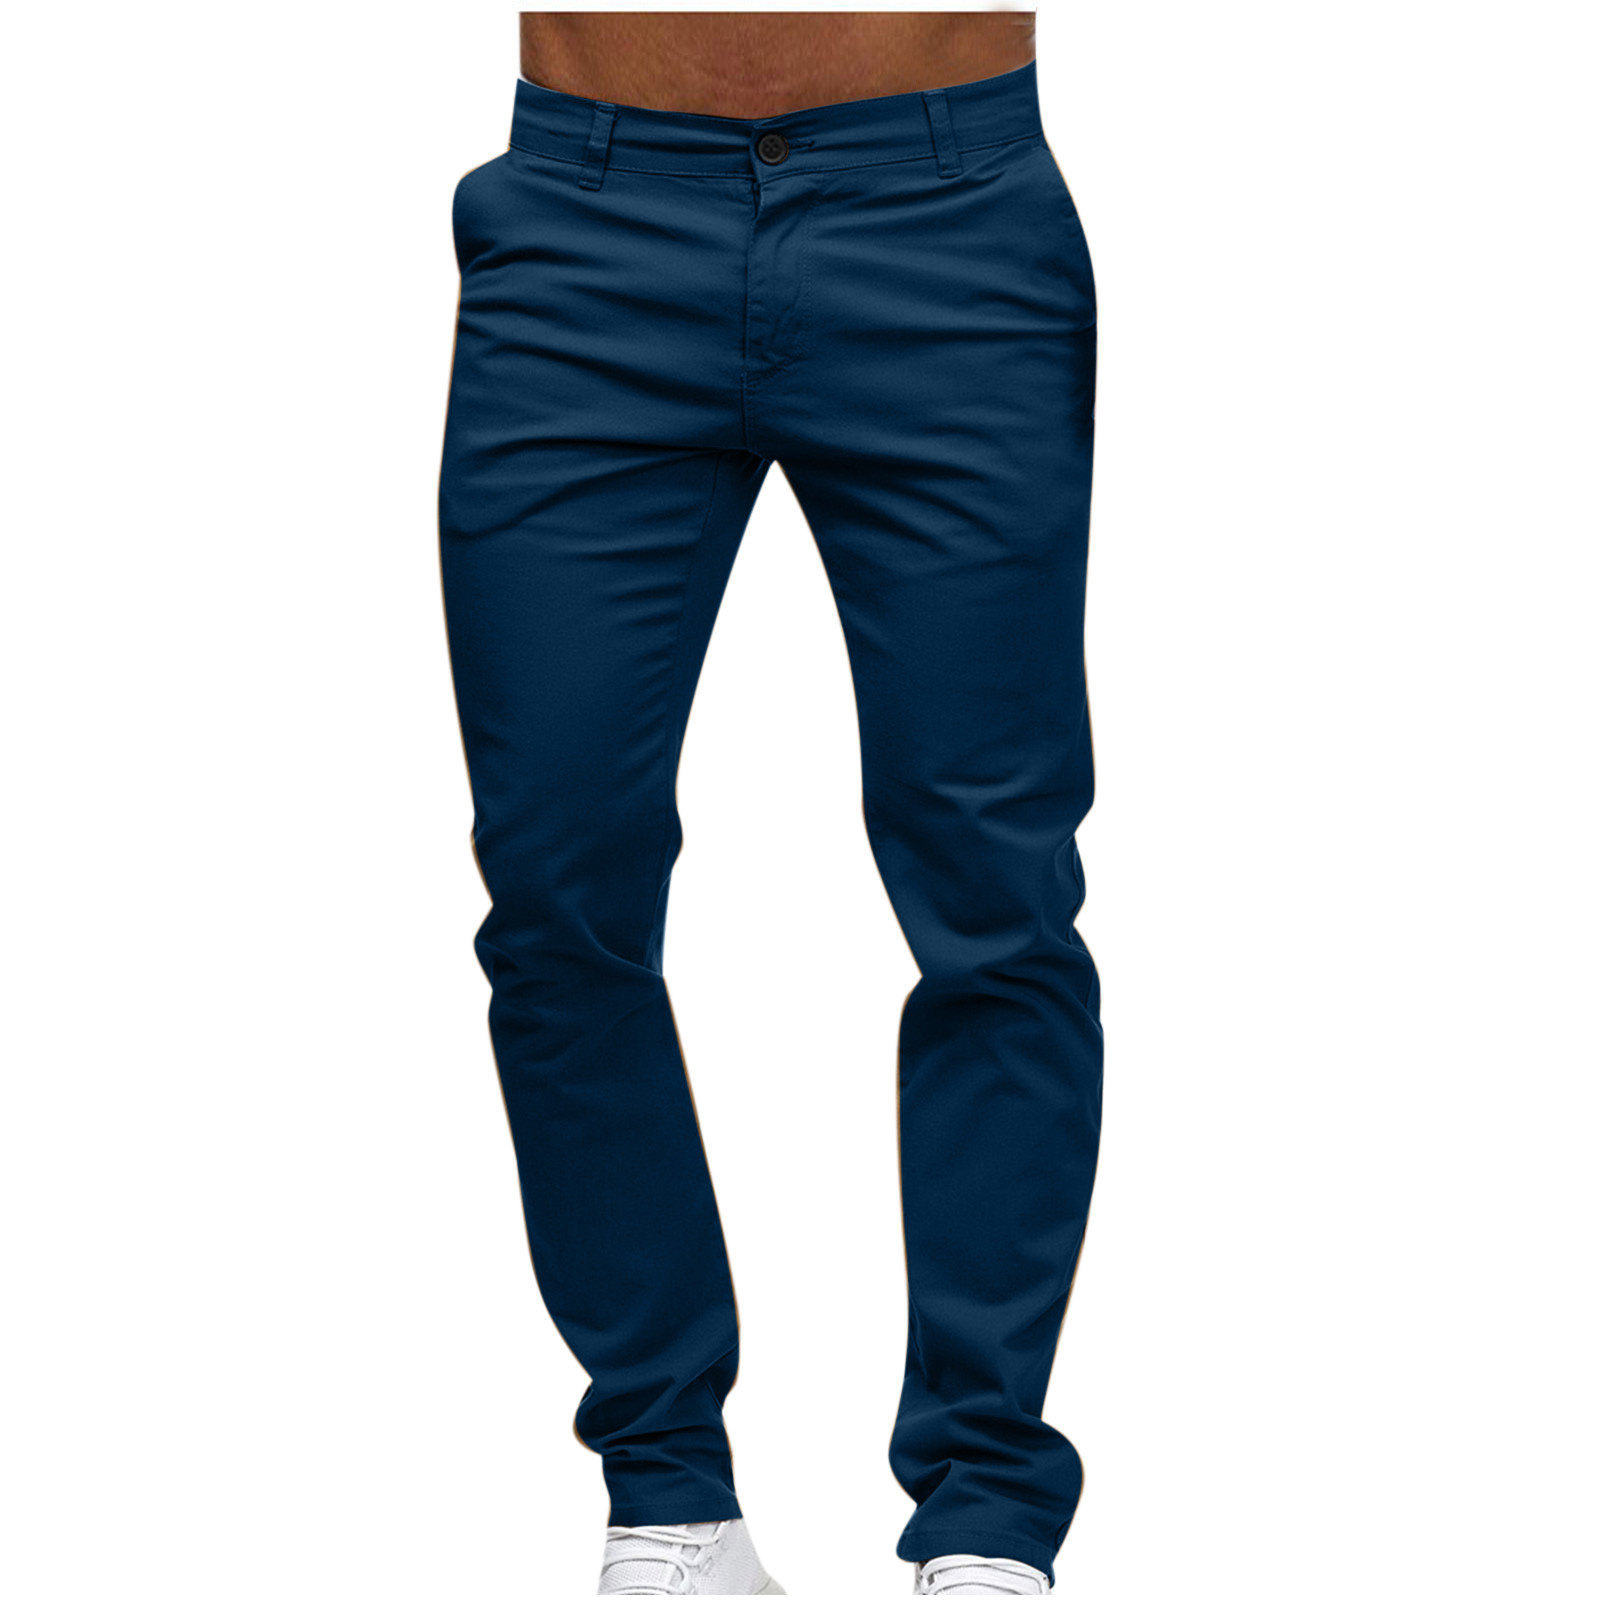 DeHolifer Mens Casual Chinos Pants Cotton Slacks Elastic Waistband Classic Fit Flat Front Khaki Pant Navy L - image 1 of 5